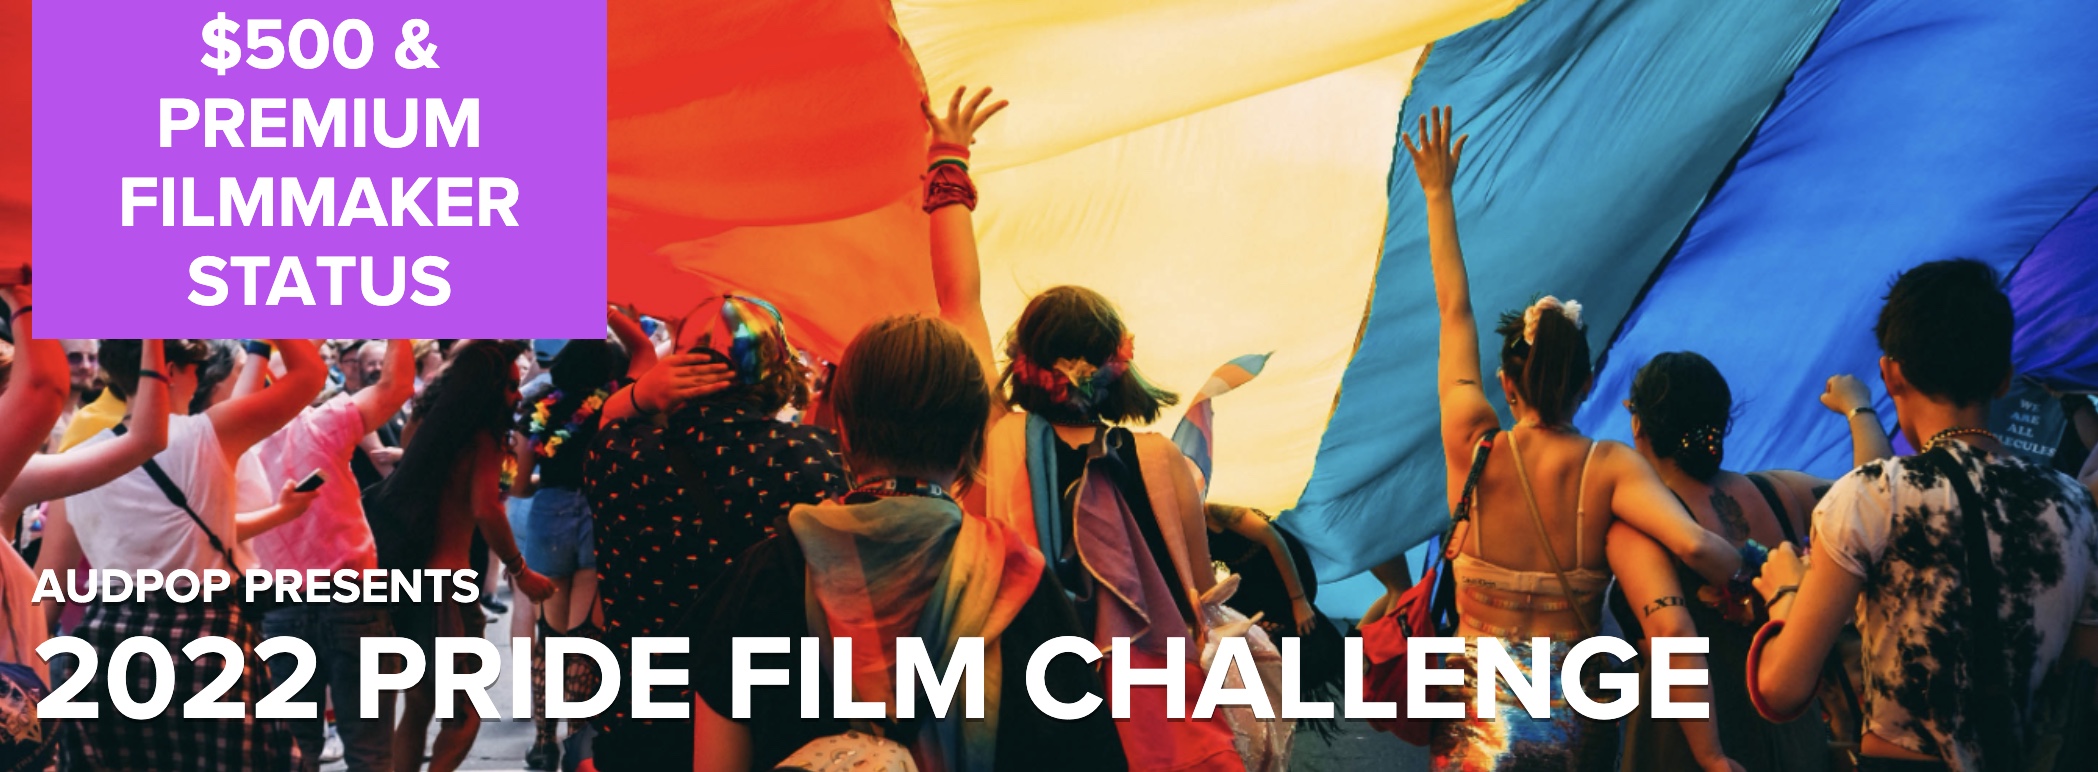 AudPop - 2022 Pride Film Challenge